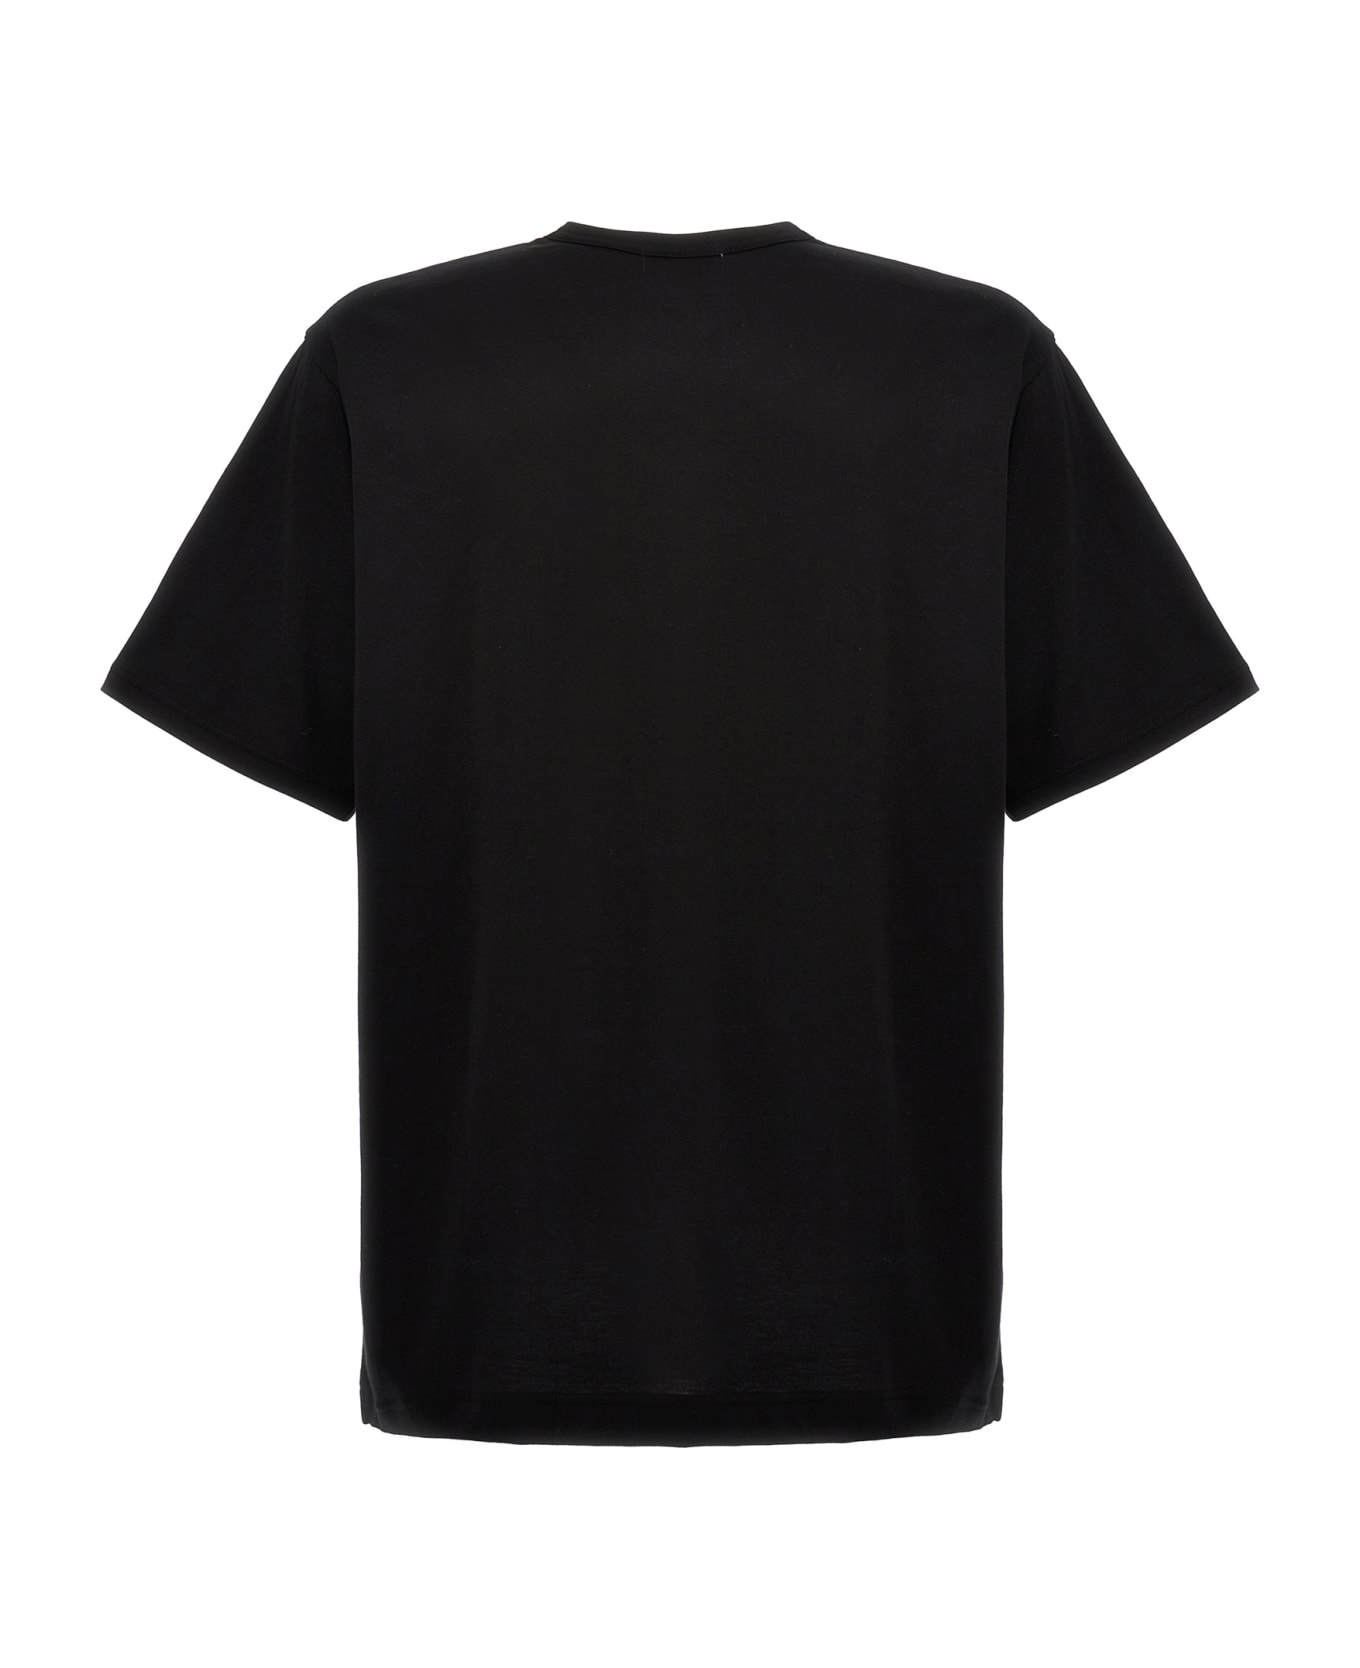 Yohji Yamamoto Printed T-shirt - Black  